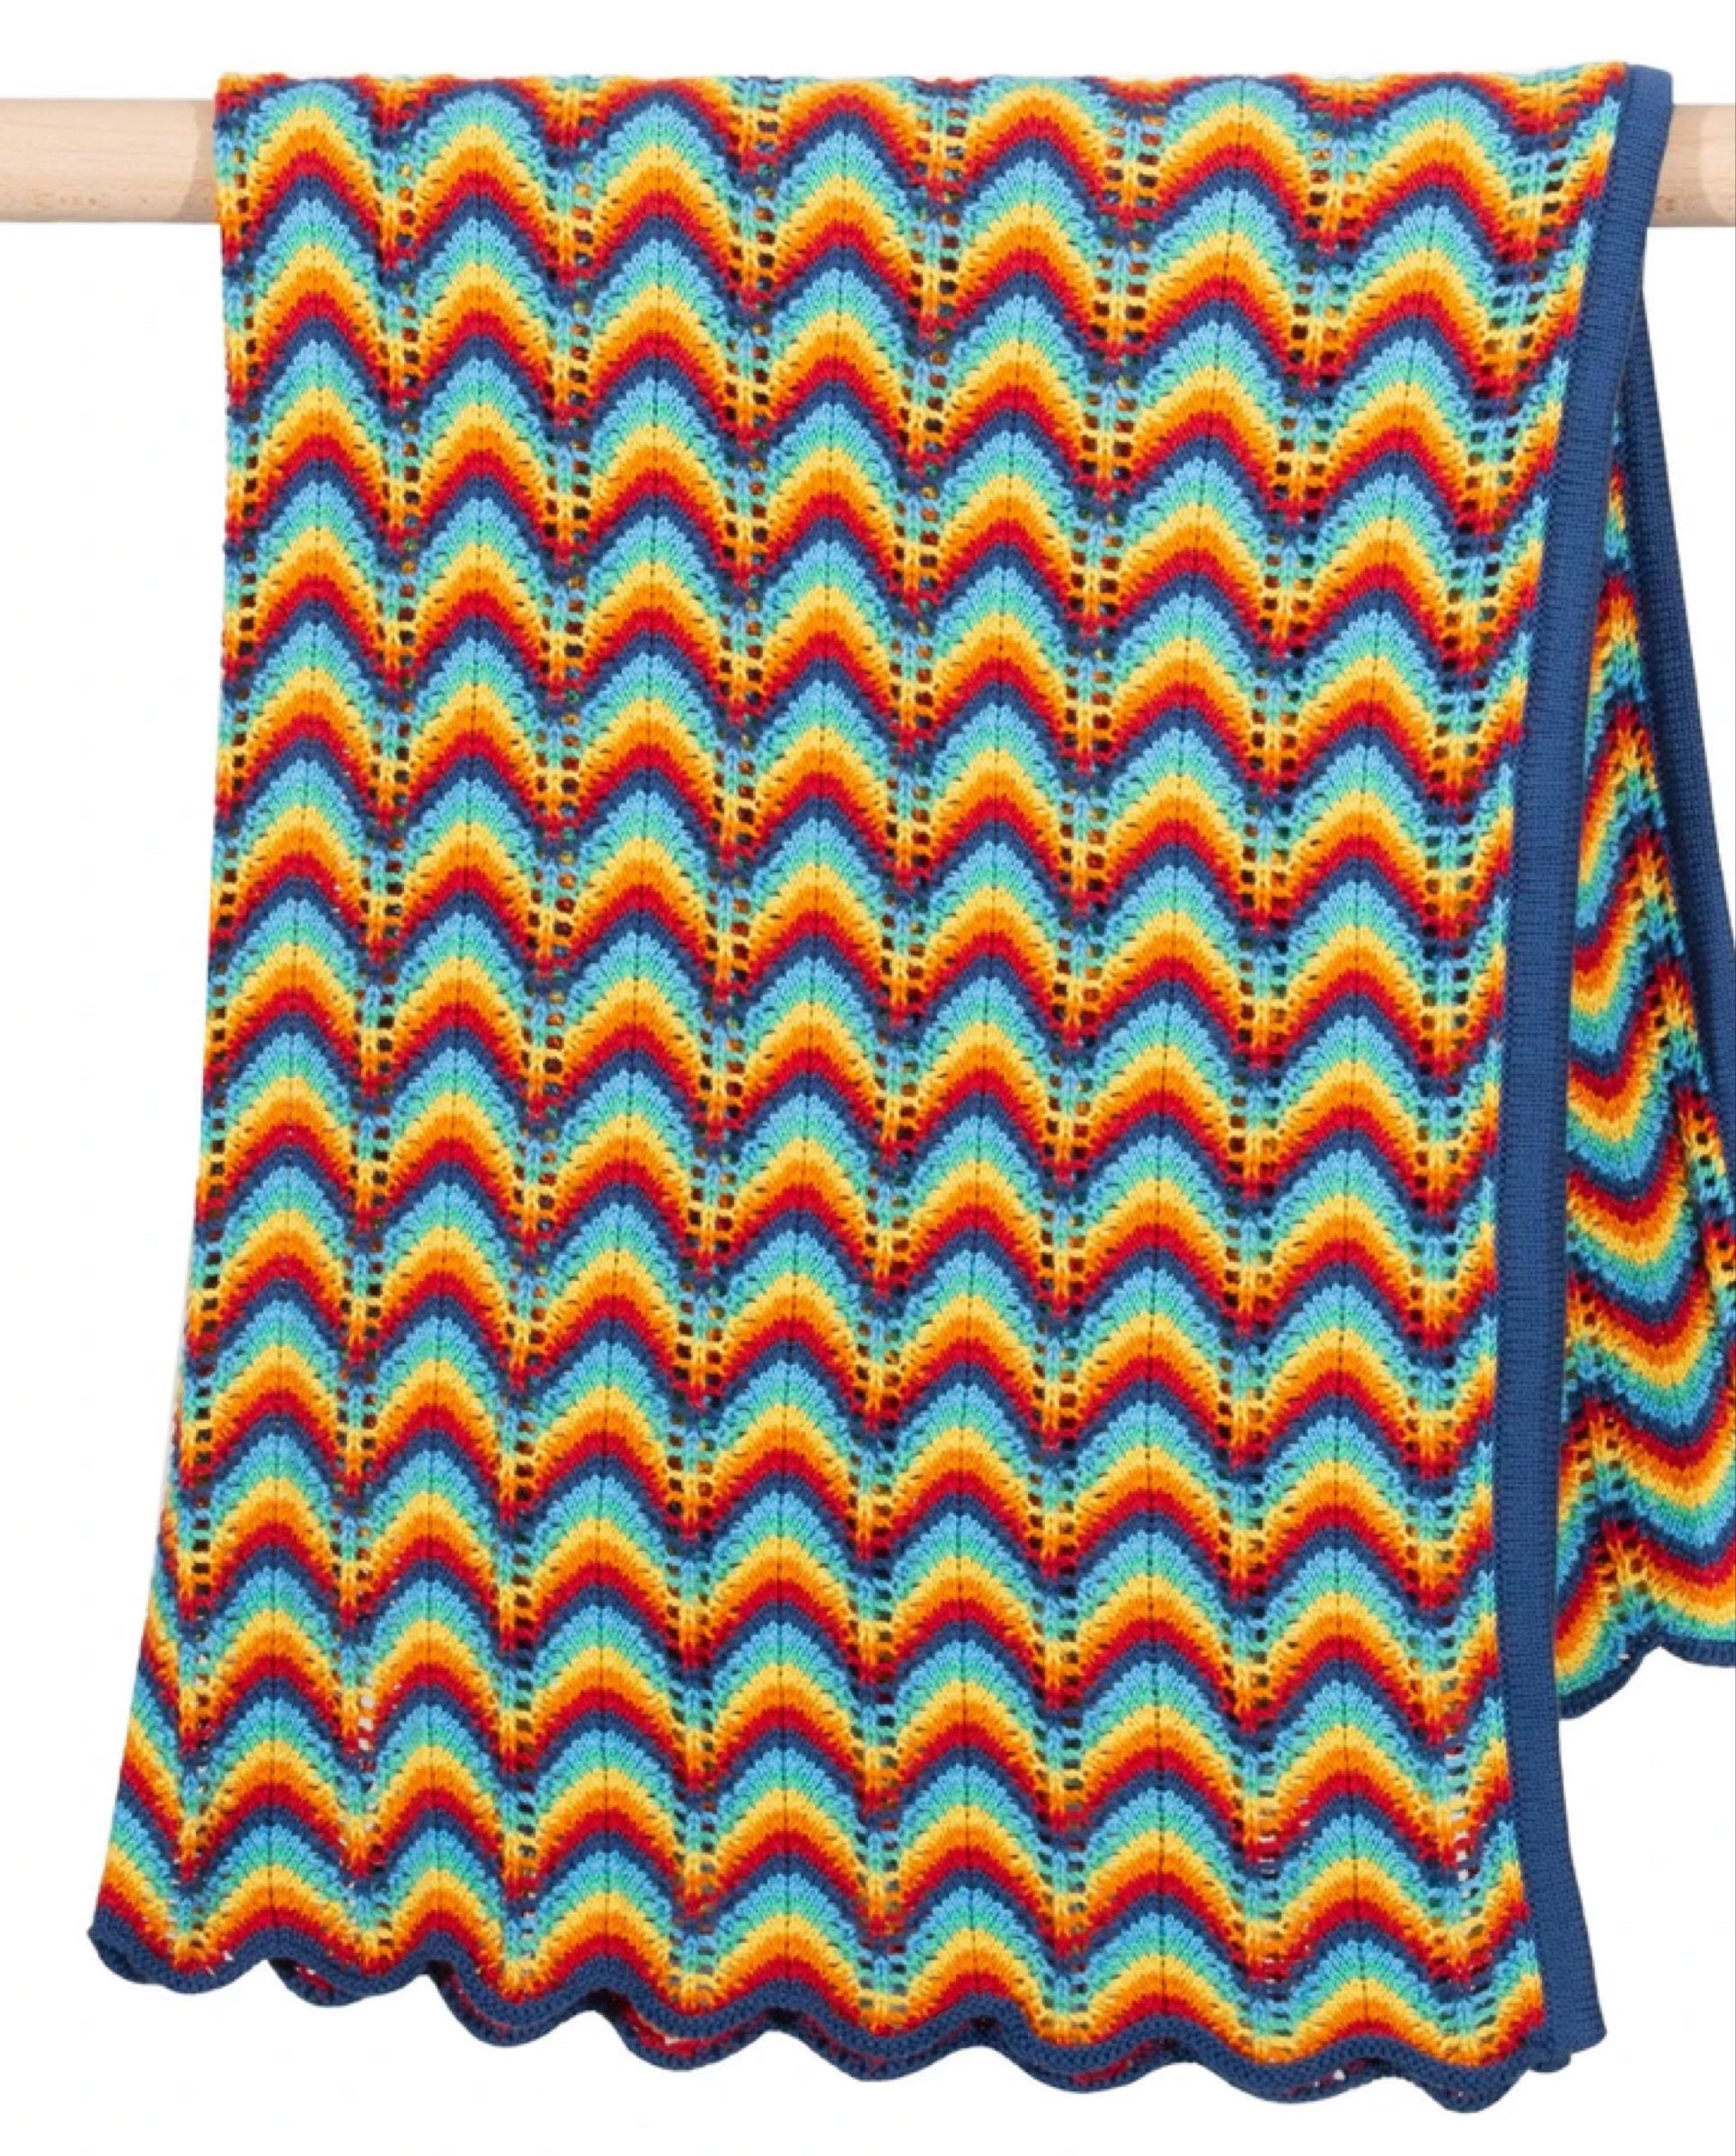 Rainbow wave knit blanket 